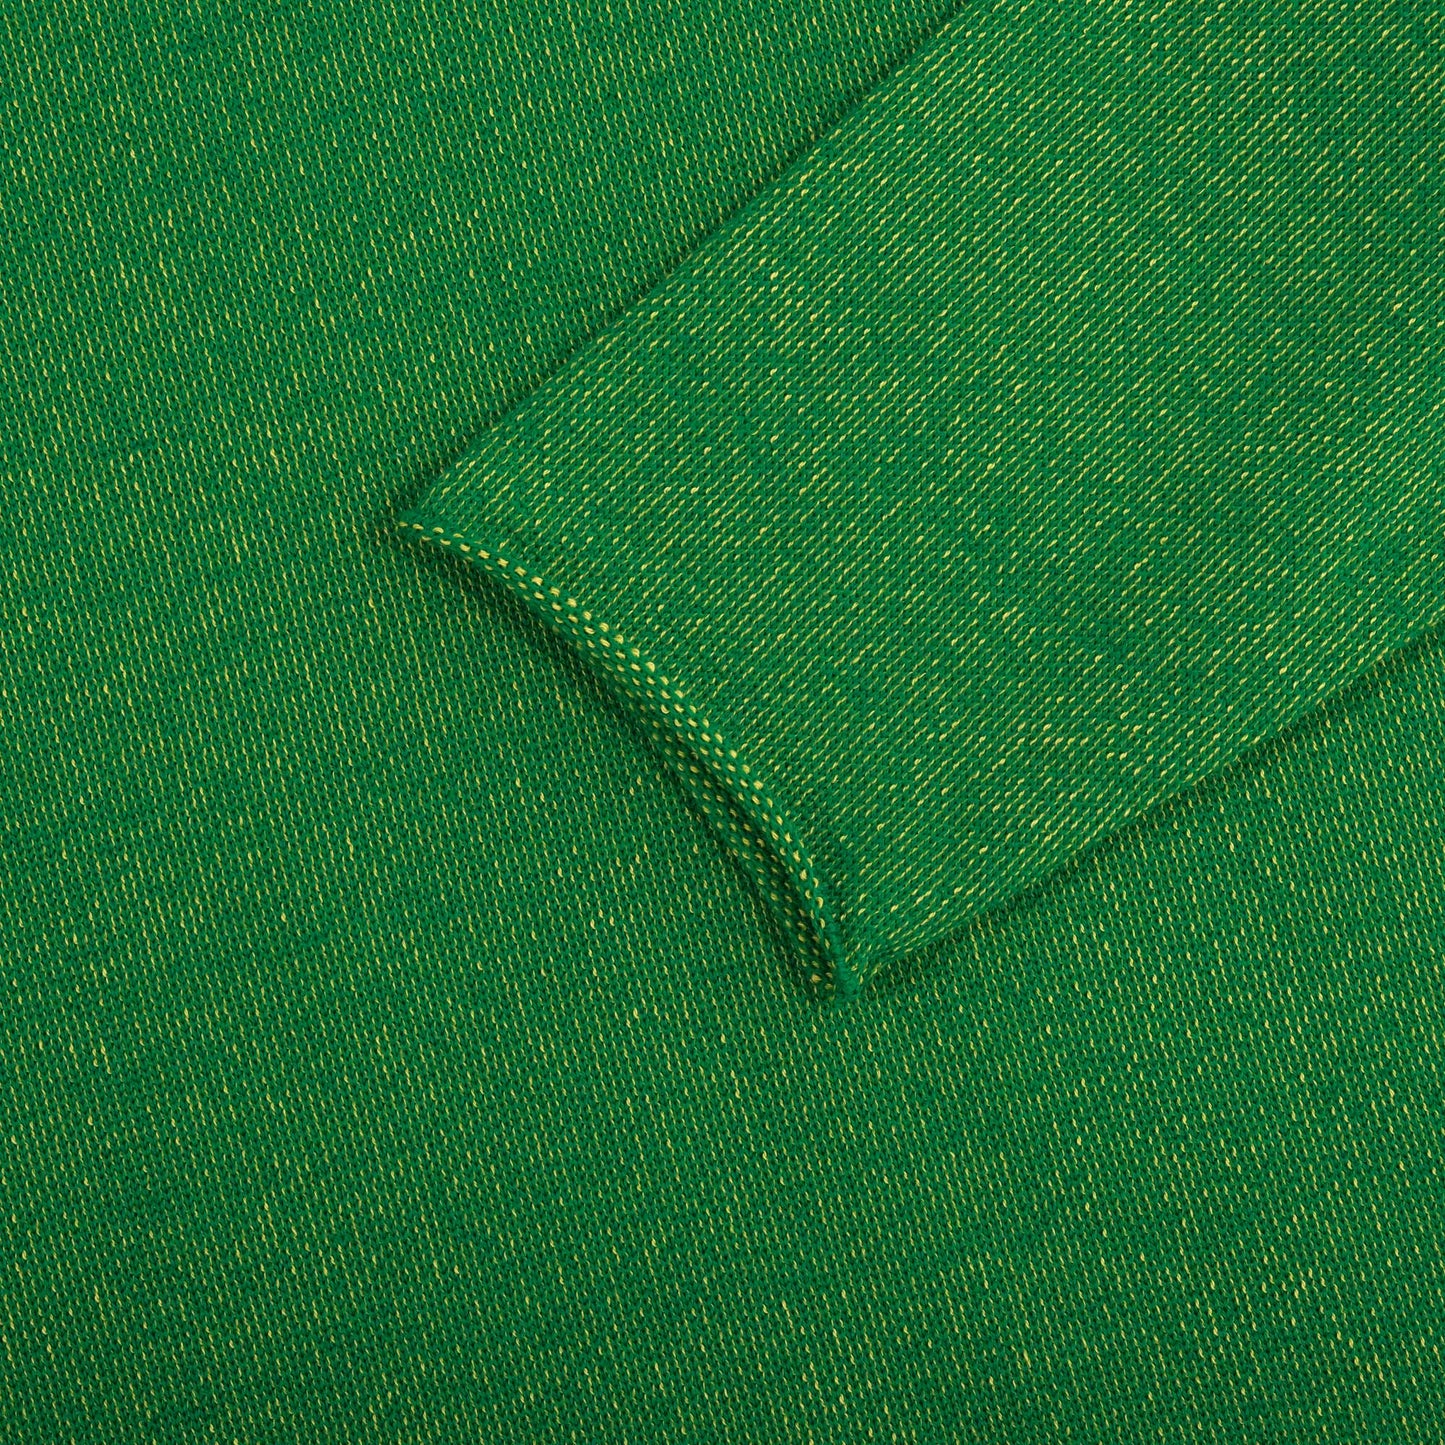 OMEN Pullover Christo Futter in Farbe grasgrün_sunshine